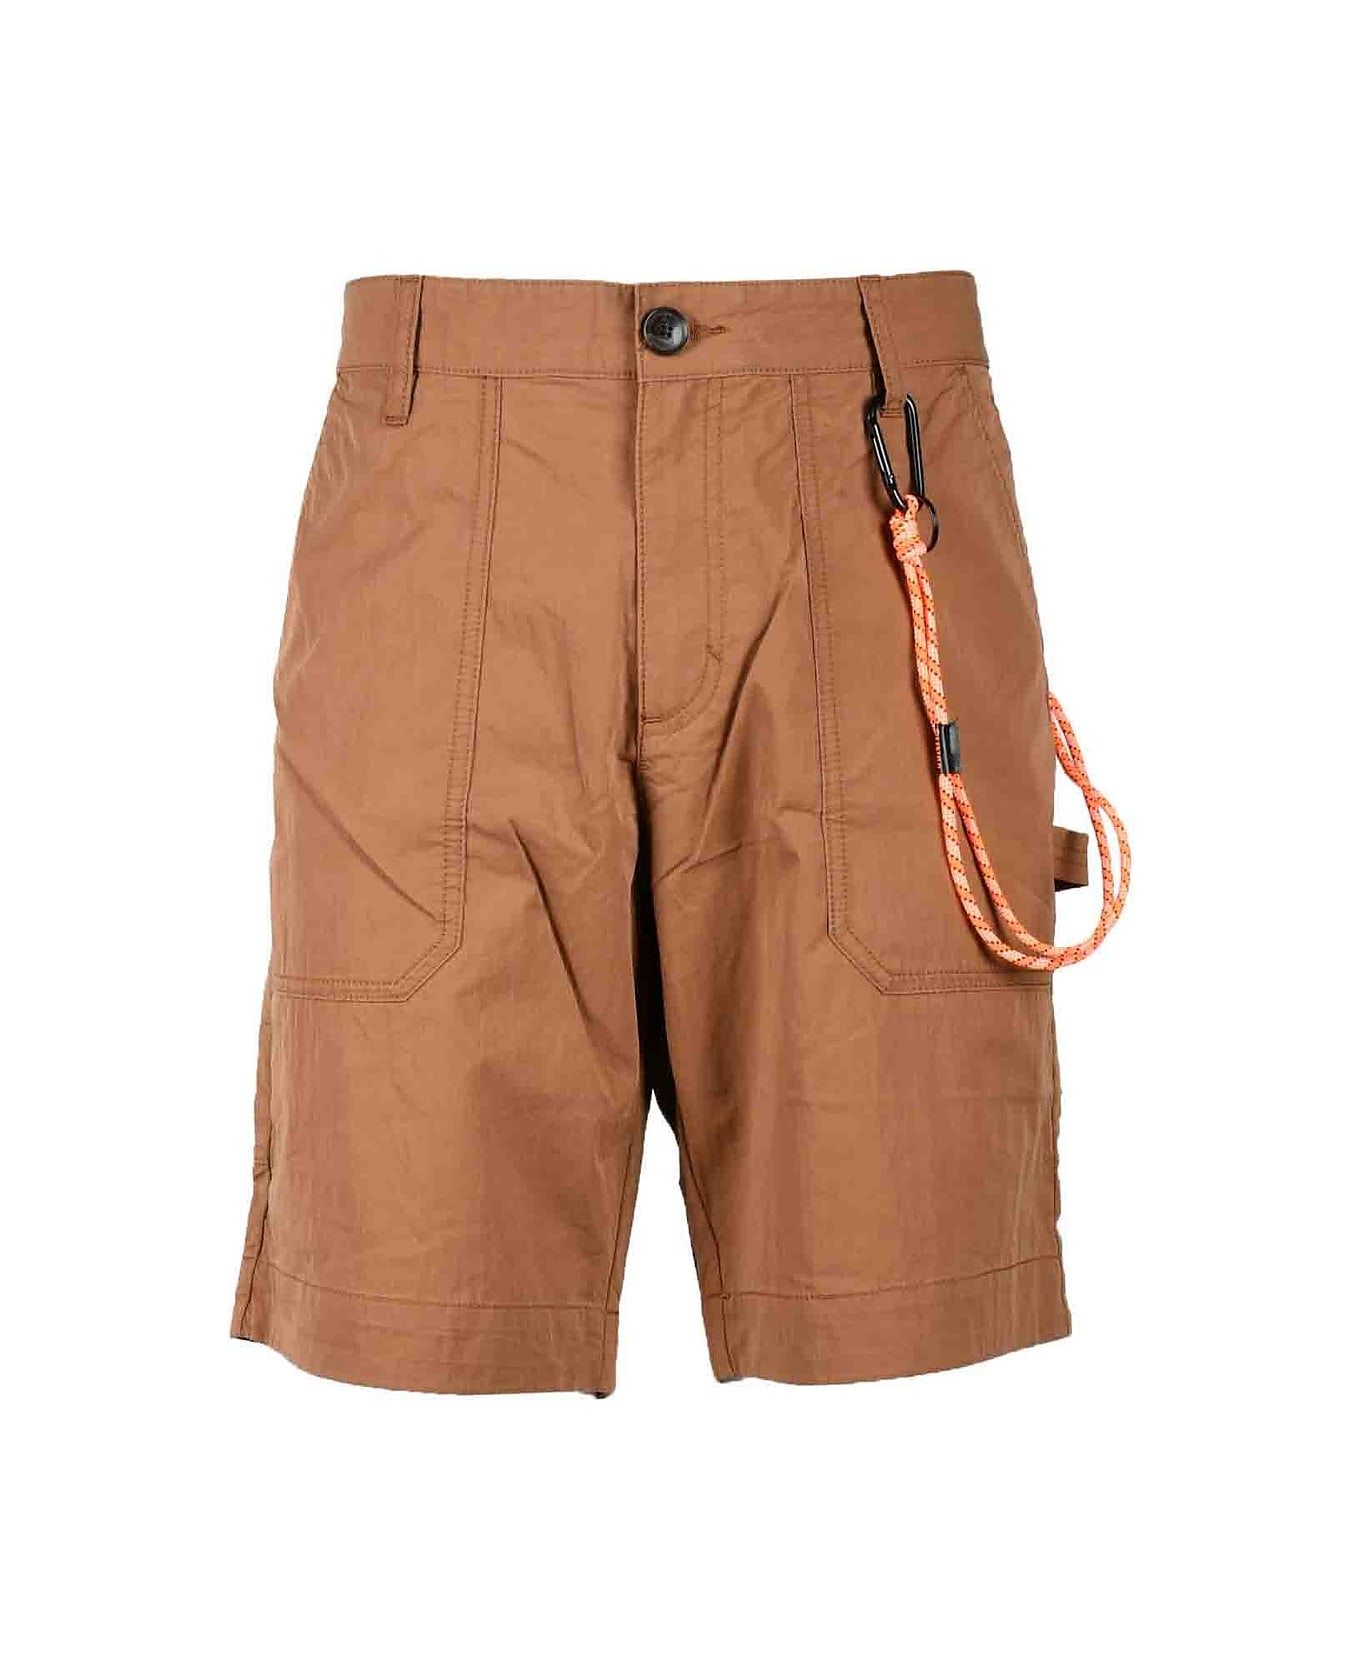 Sun 68 Men's Brown Bermuda Shorts - Tobacco